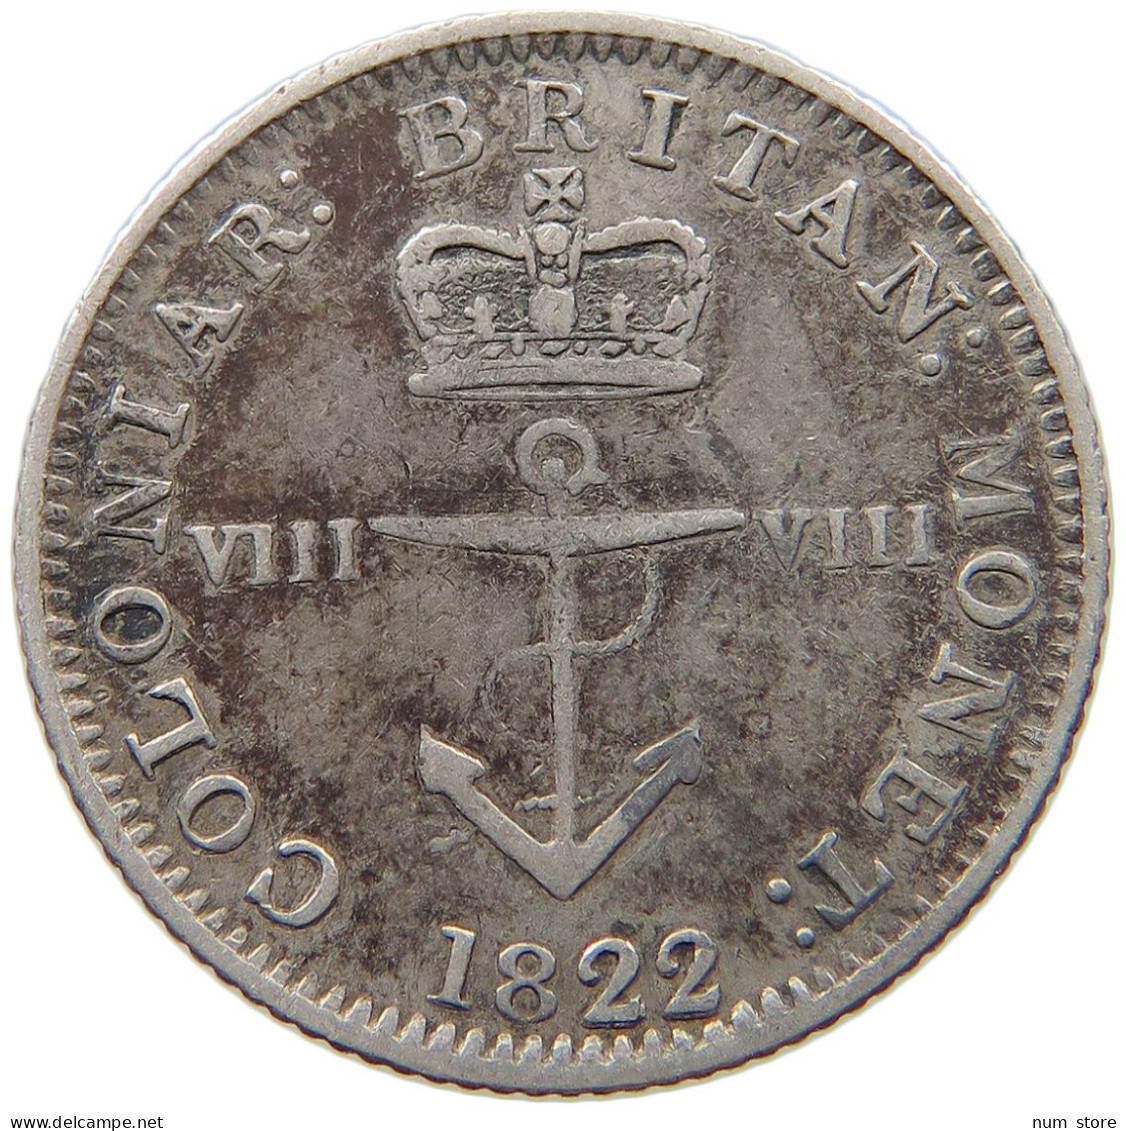 BRITISH WEST INDIES 1/8 DOLLAR 1822 George IV. (1820-1830) #t112 0175 - Antilles